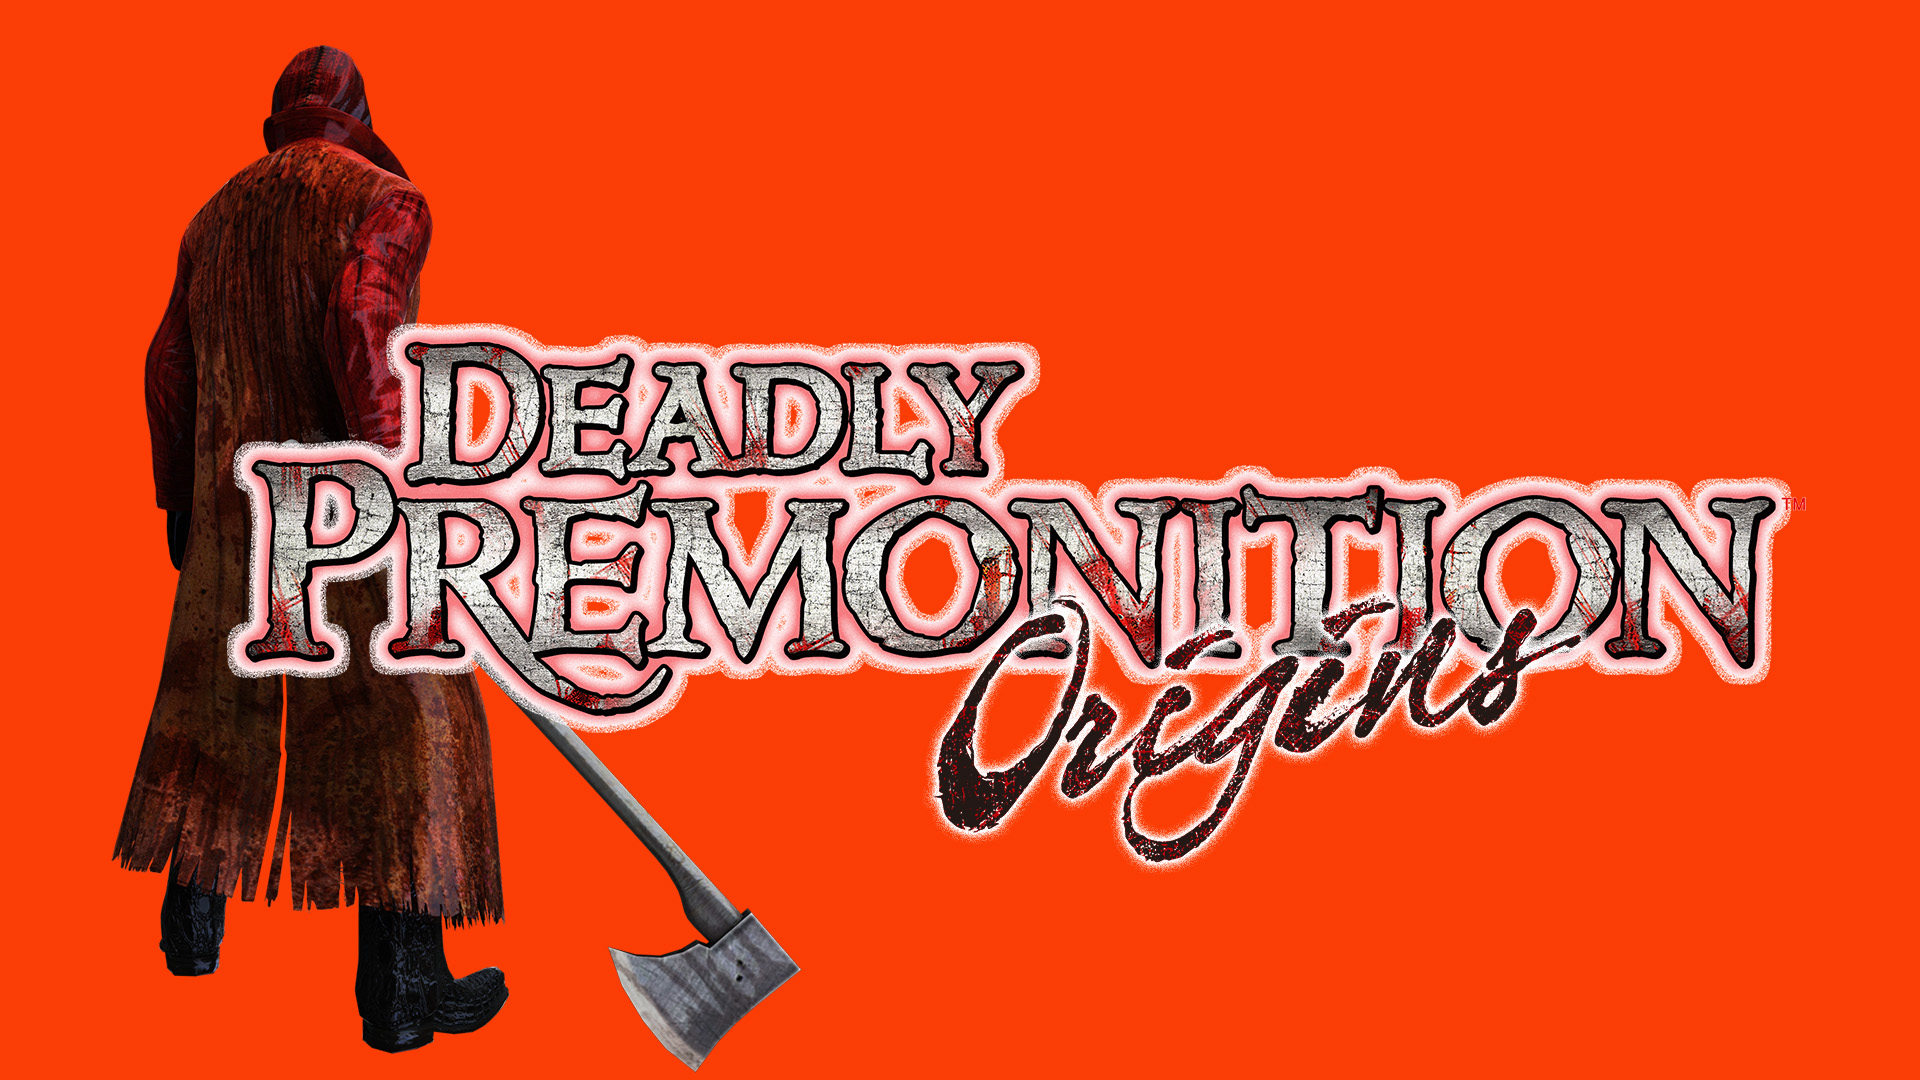 deadly premonition switch eshop